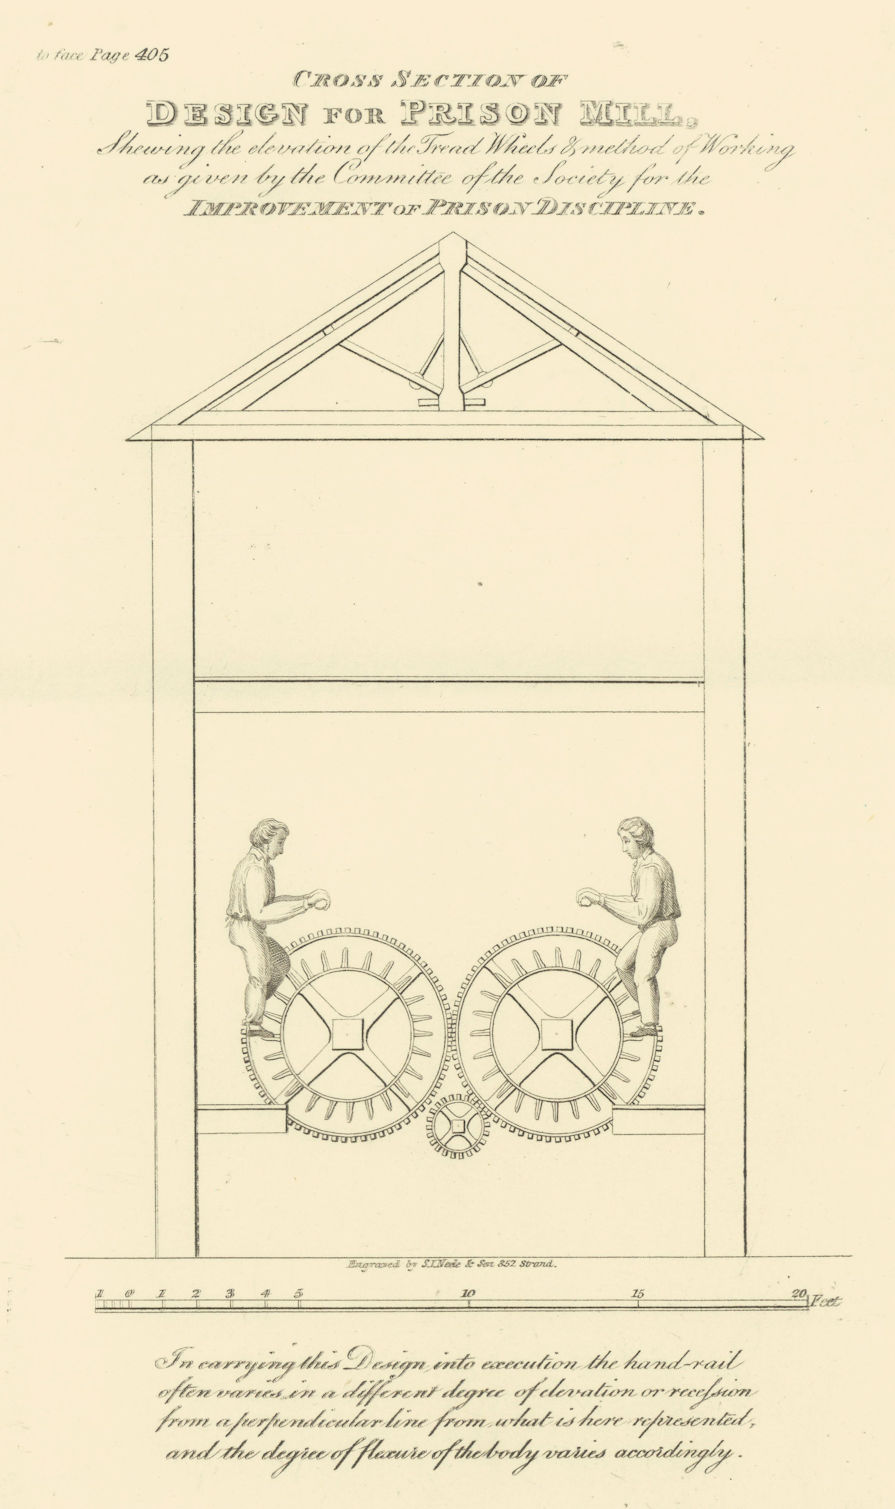 Brixton Prison Mill for the improvement of Prison Discipline 1827 old print